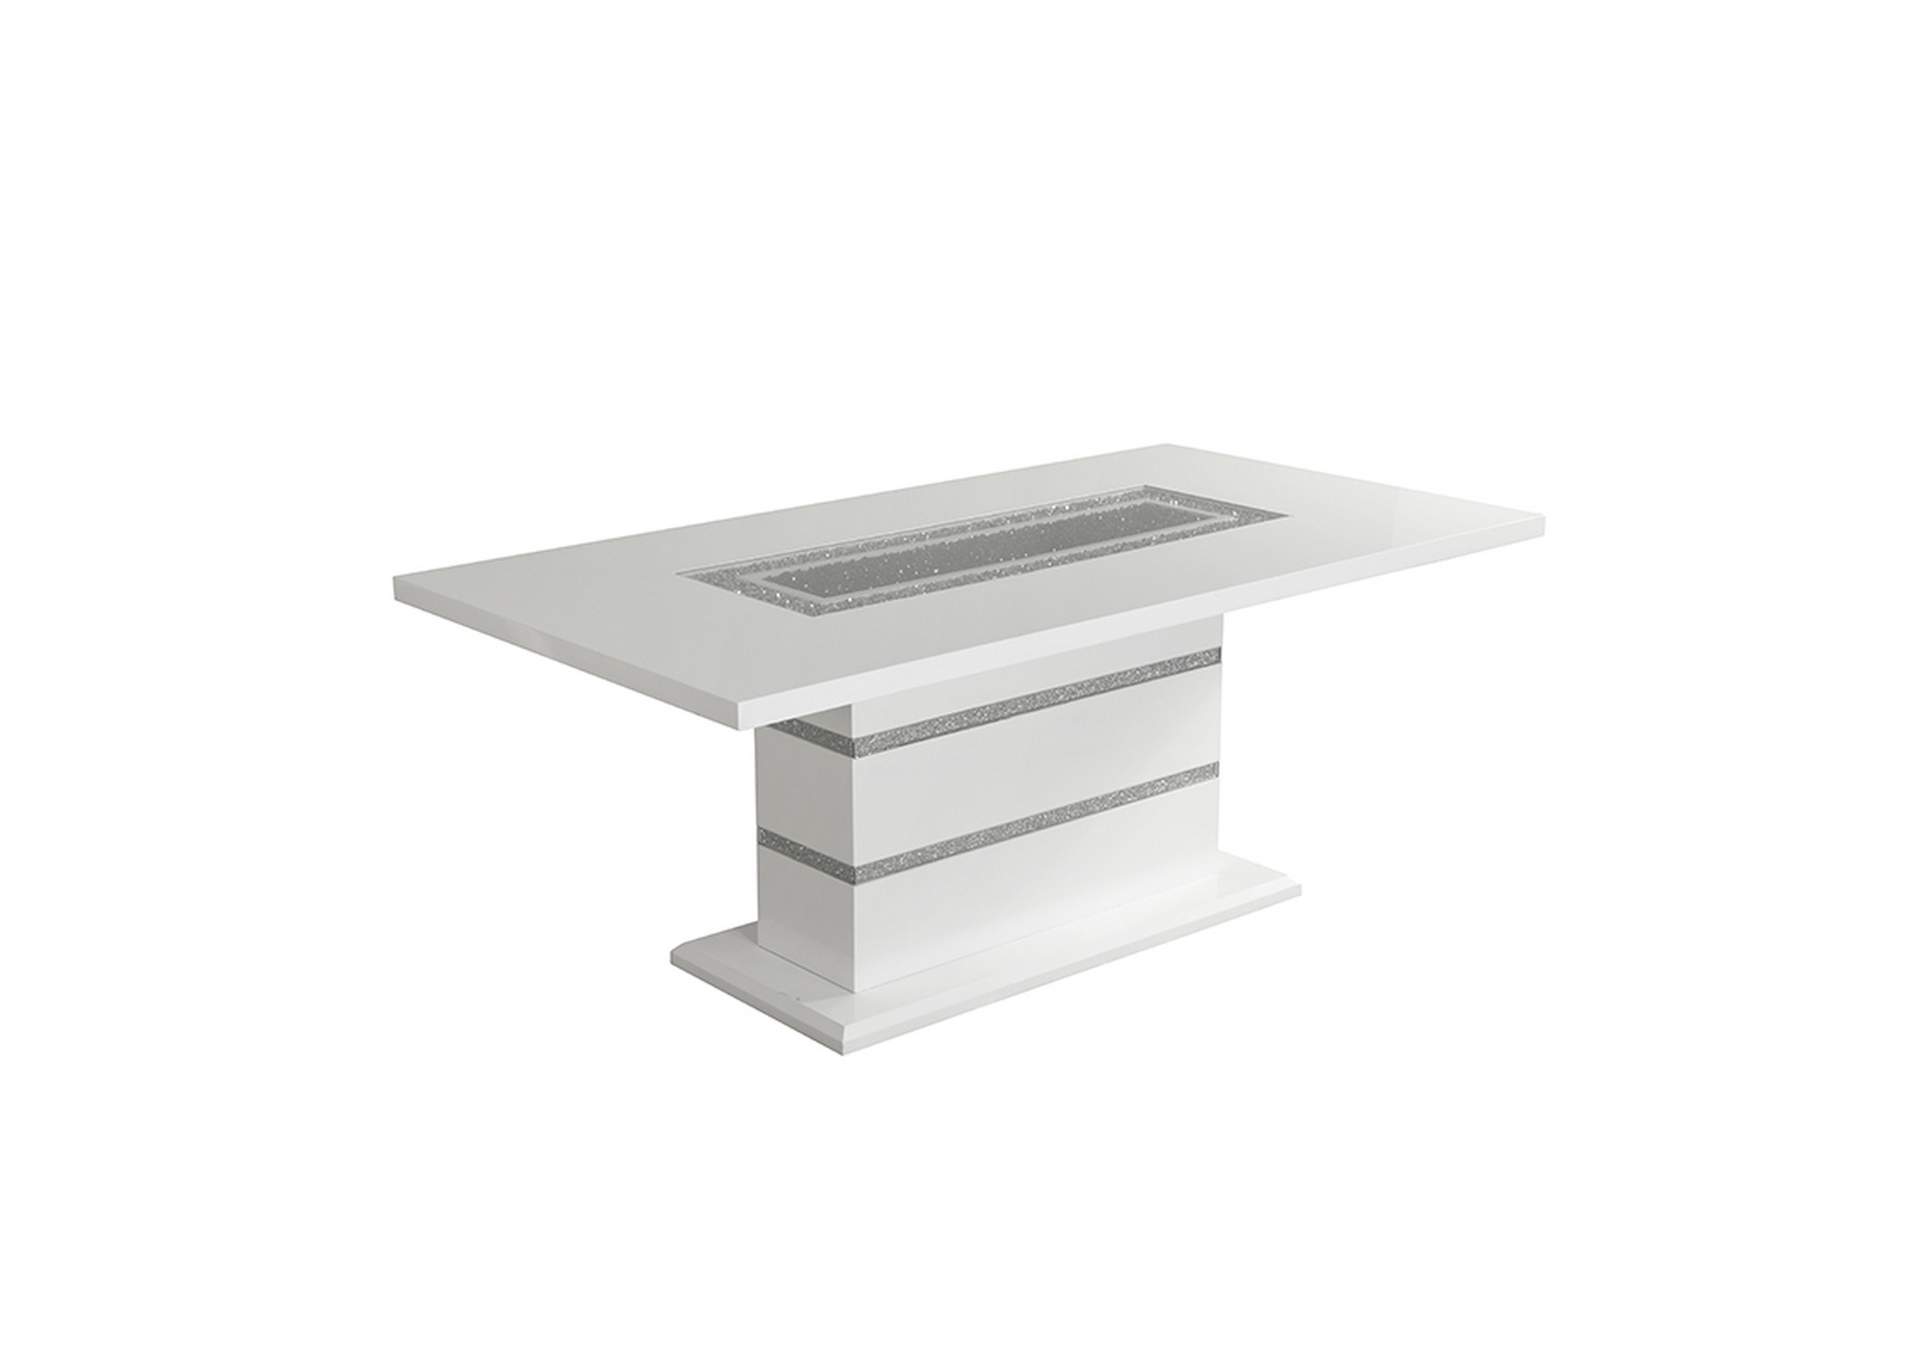 Silver High Gloss Dining Table,Global Furniture USA